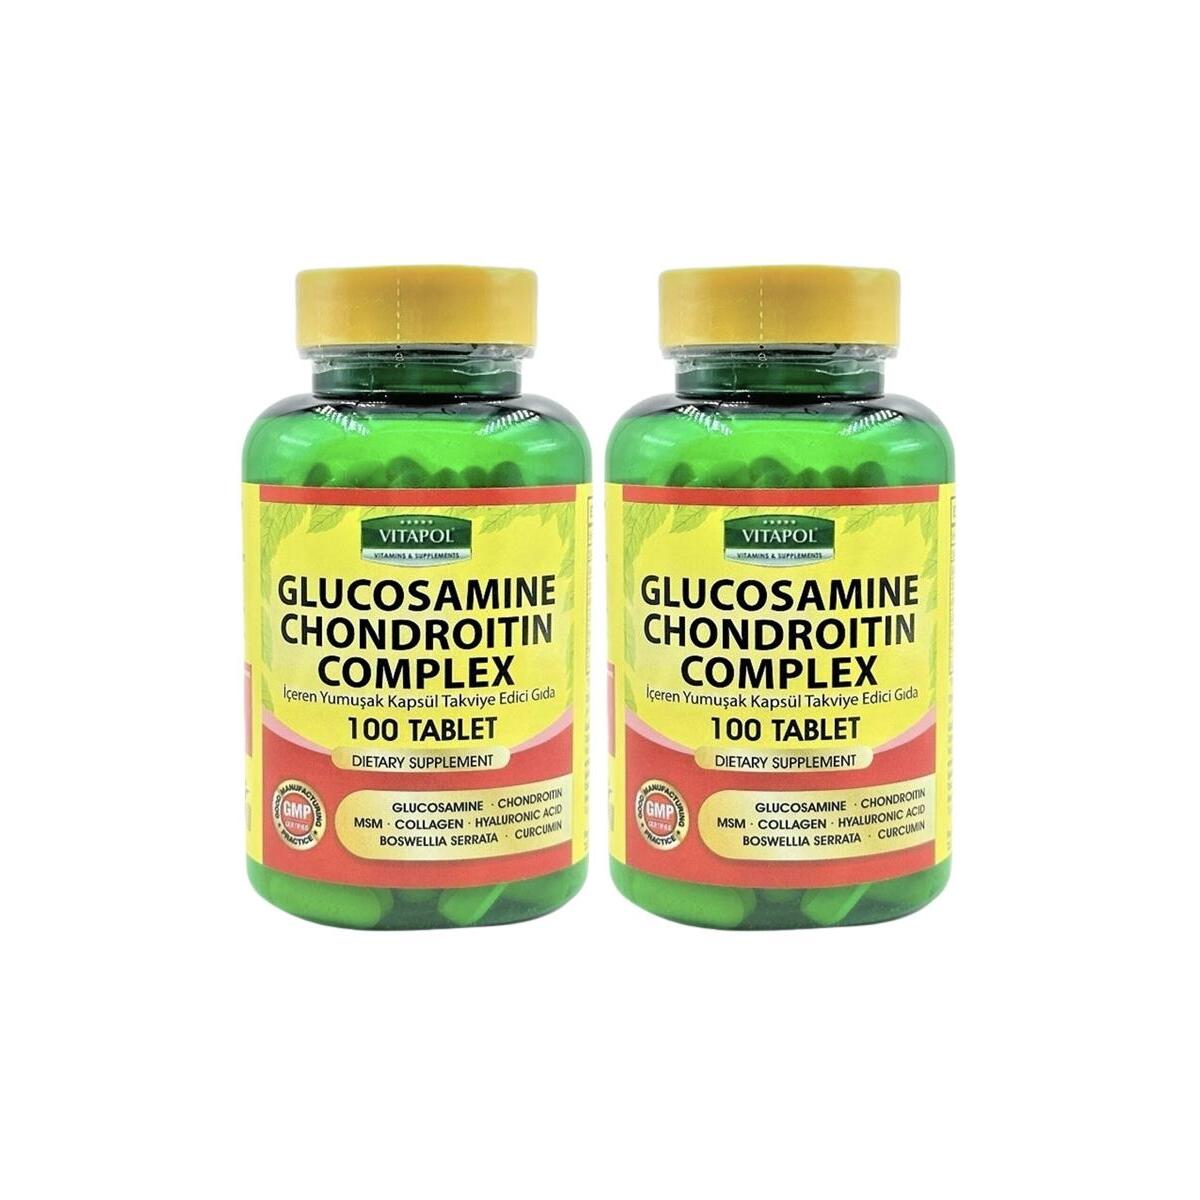 Vitapol Glucosamine Chondroitin Complex 2X100 Tablet Msm Collagen Hyaluronic Acid Boswellia Serrata